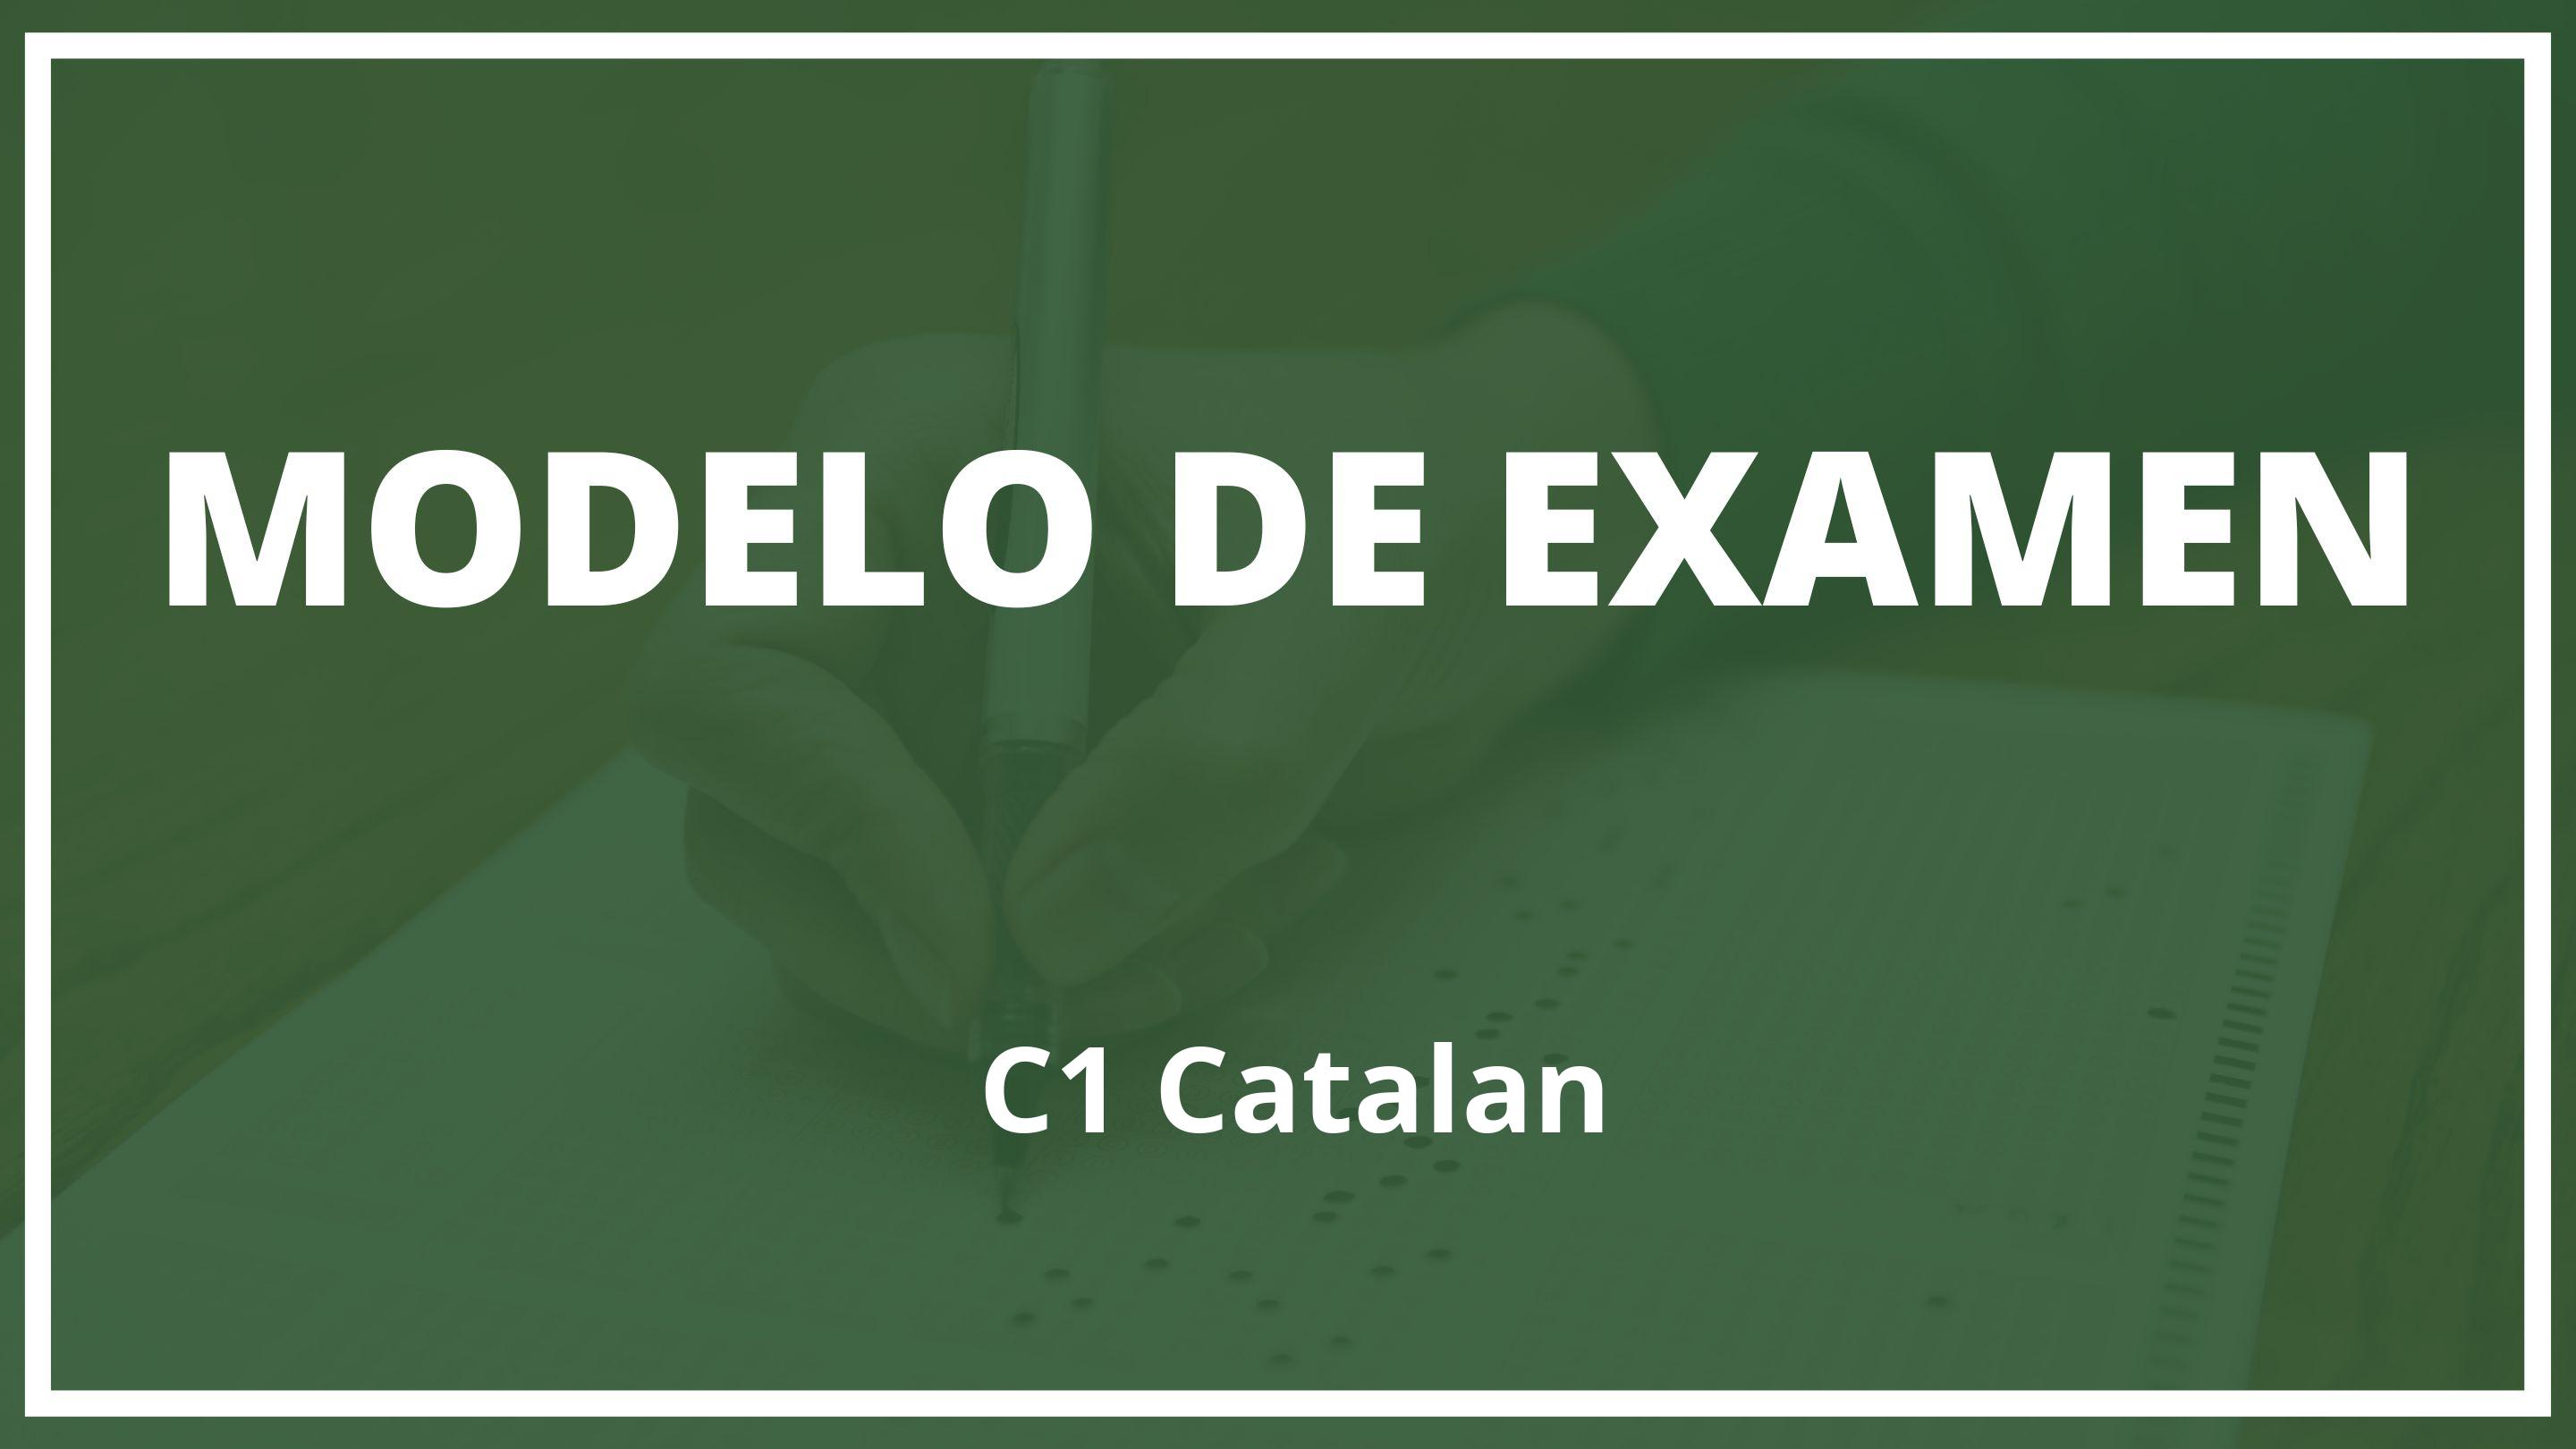 Examen C1 Catalan